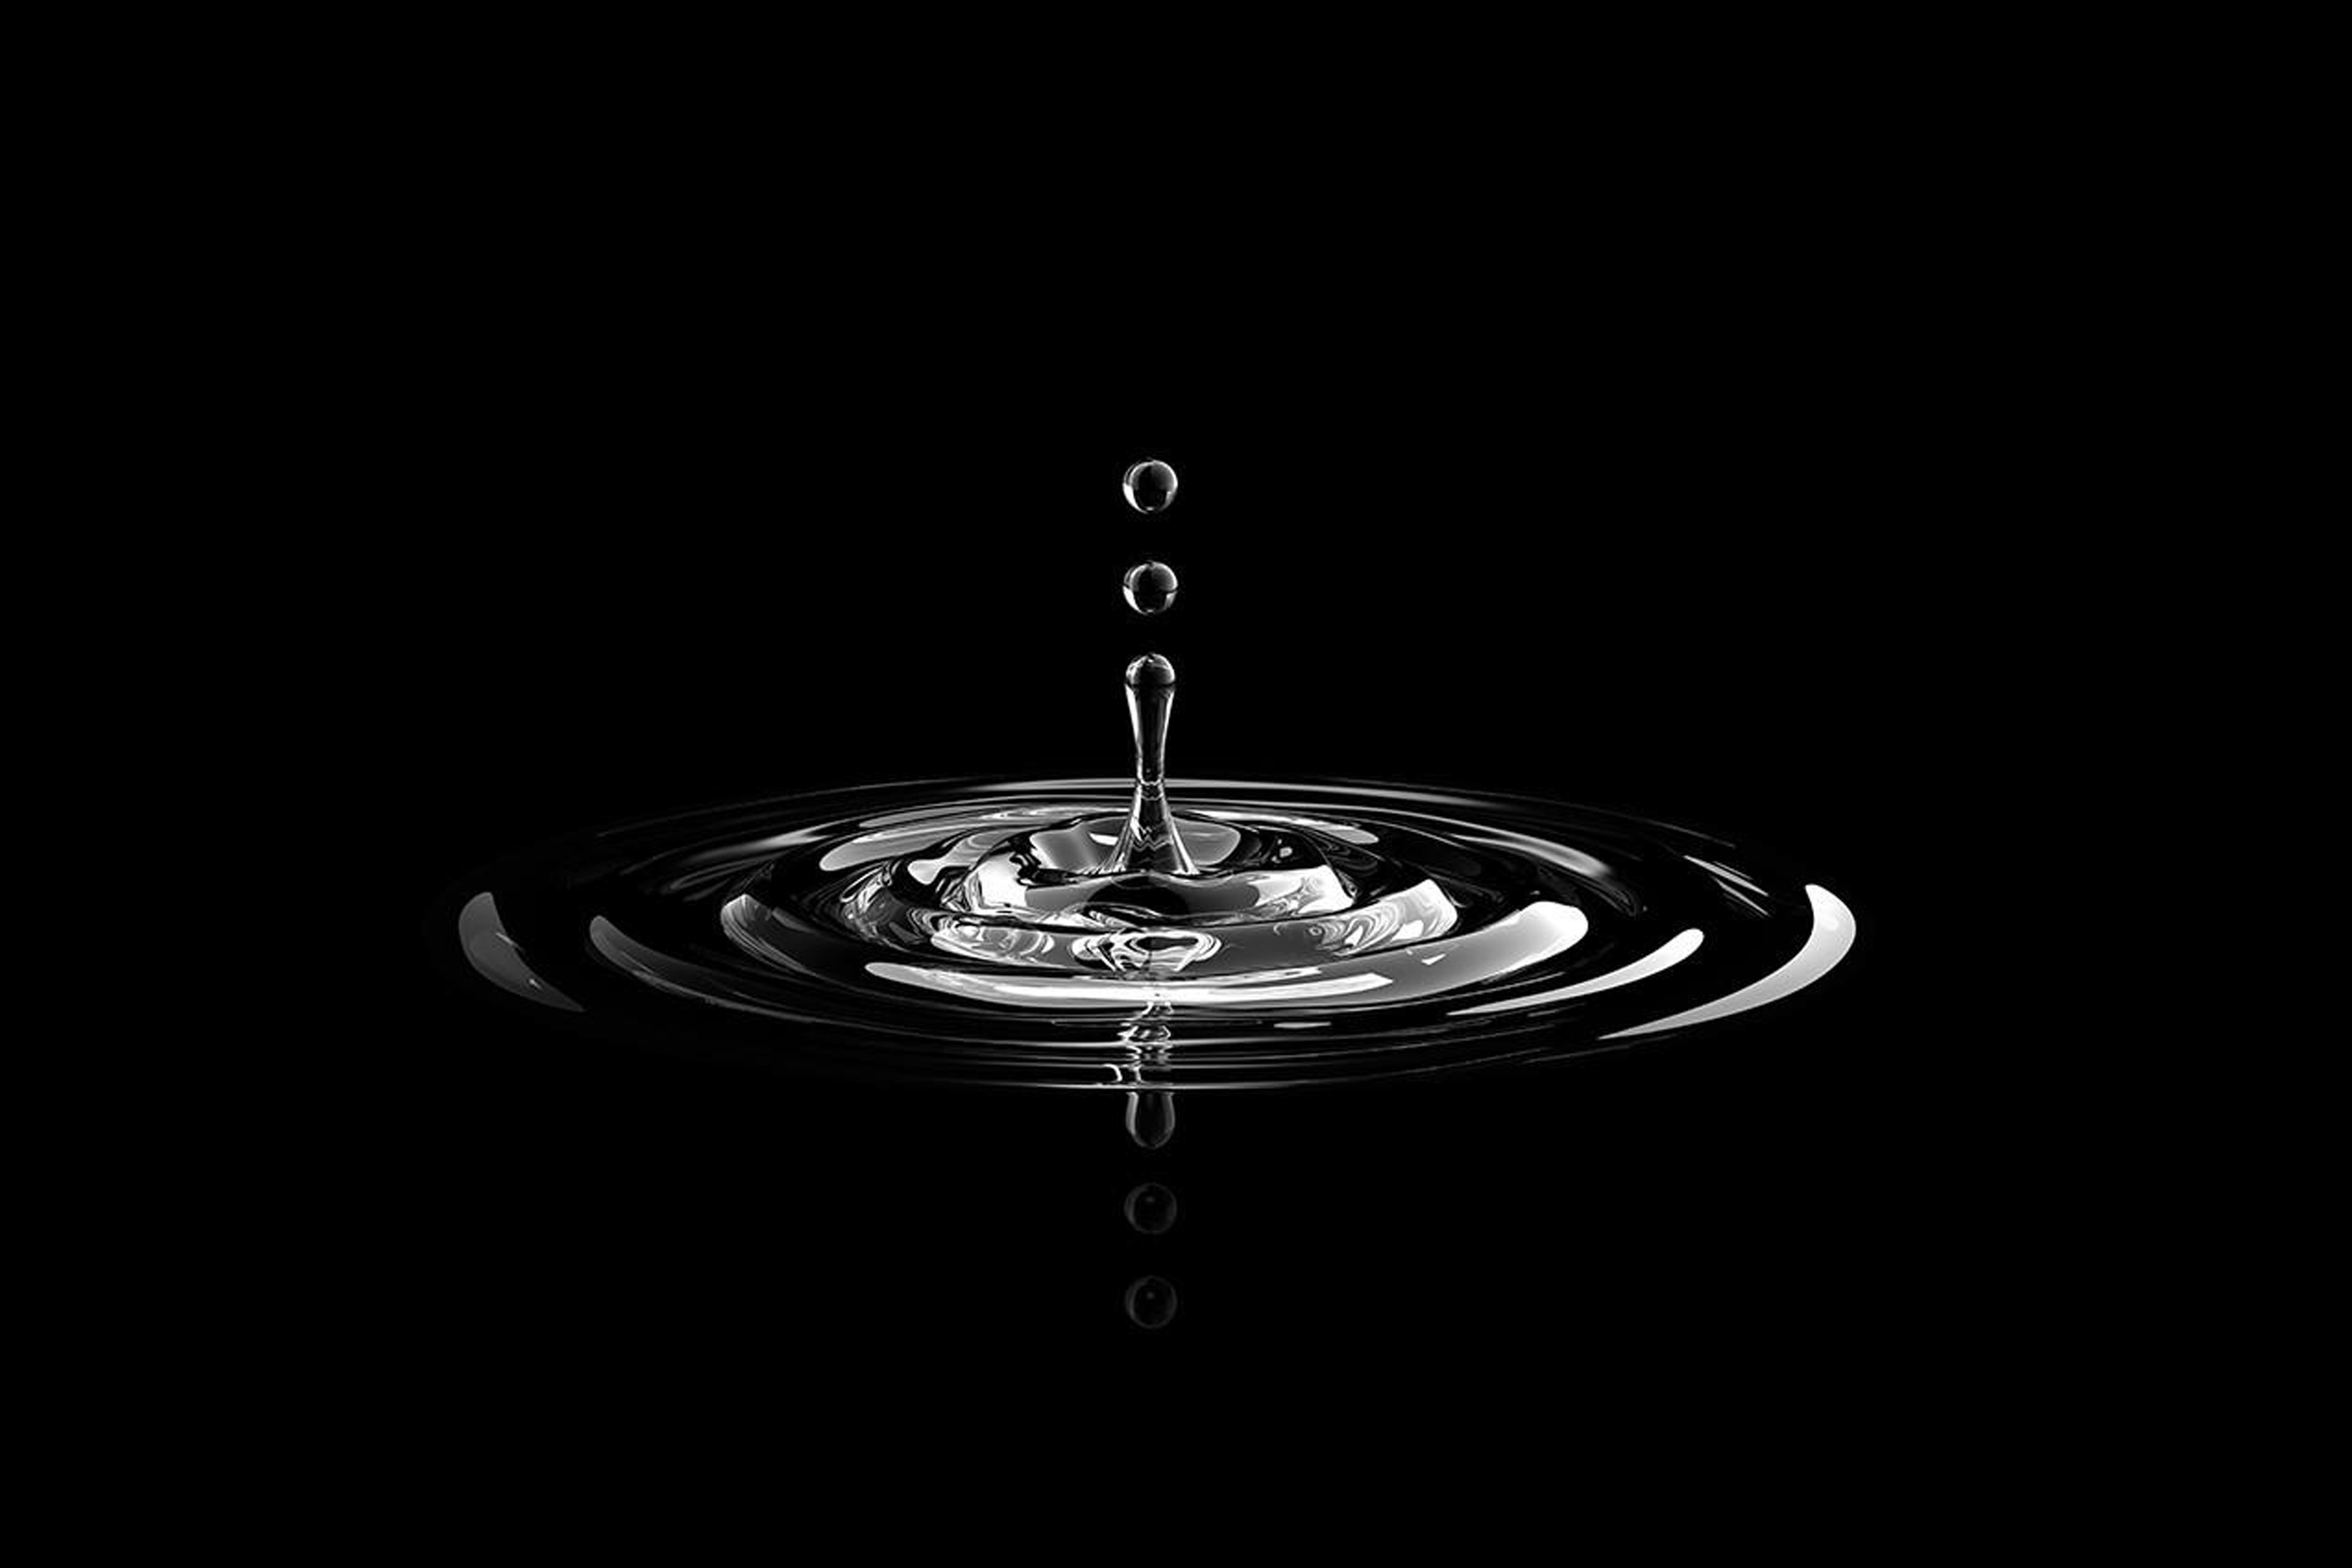 Water drop creating ripples around it 